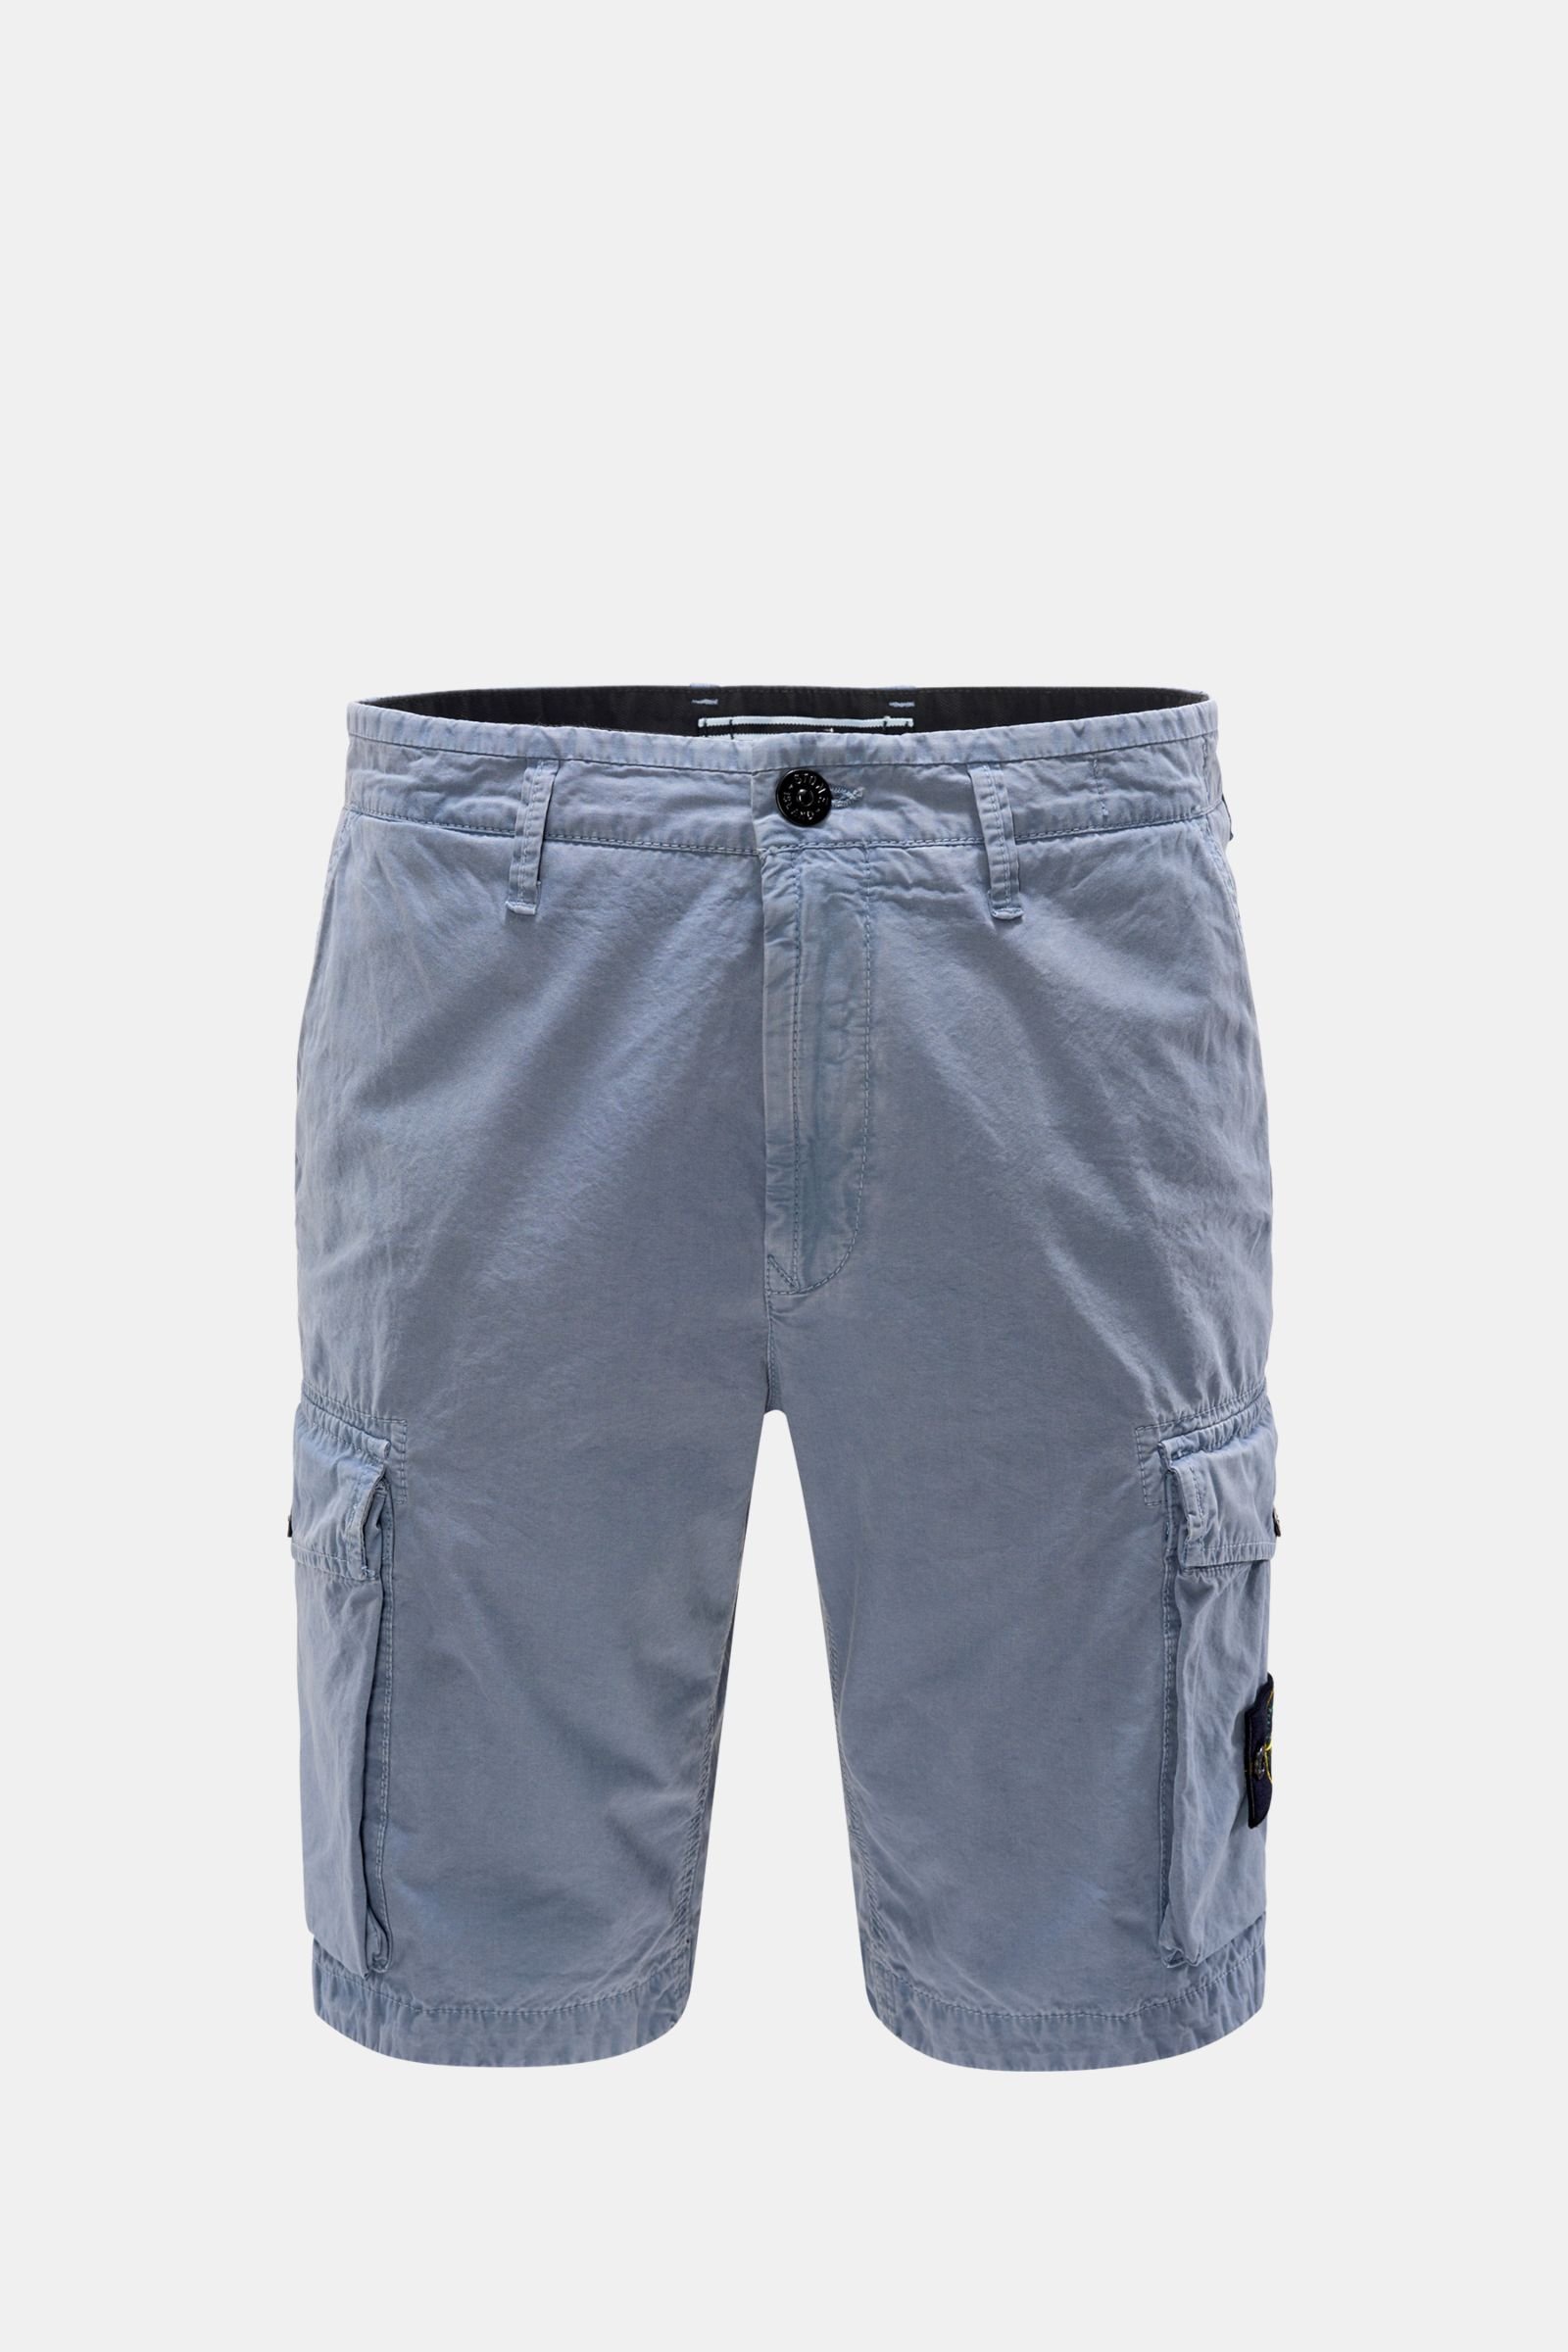 Cargo Bermuda shorts grey-blue